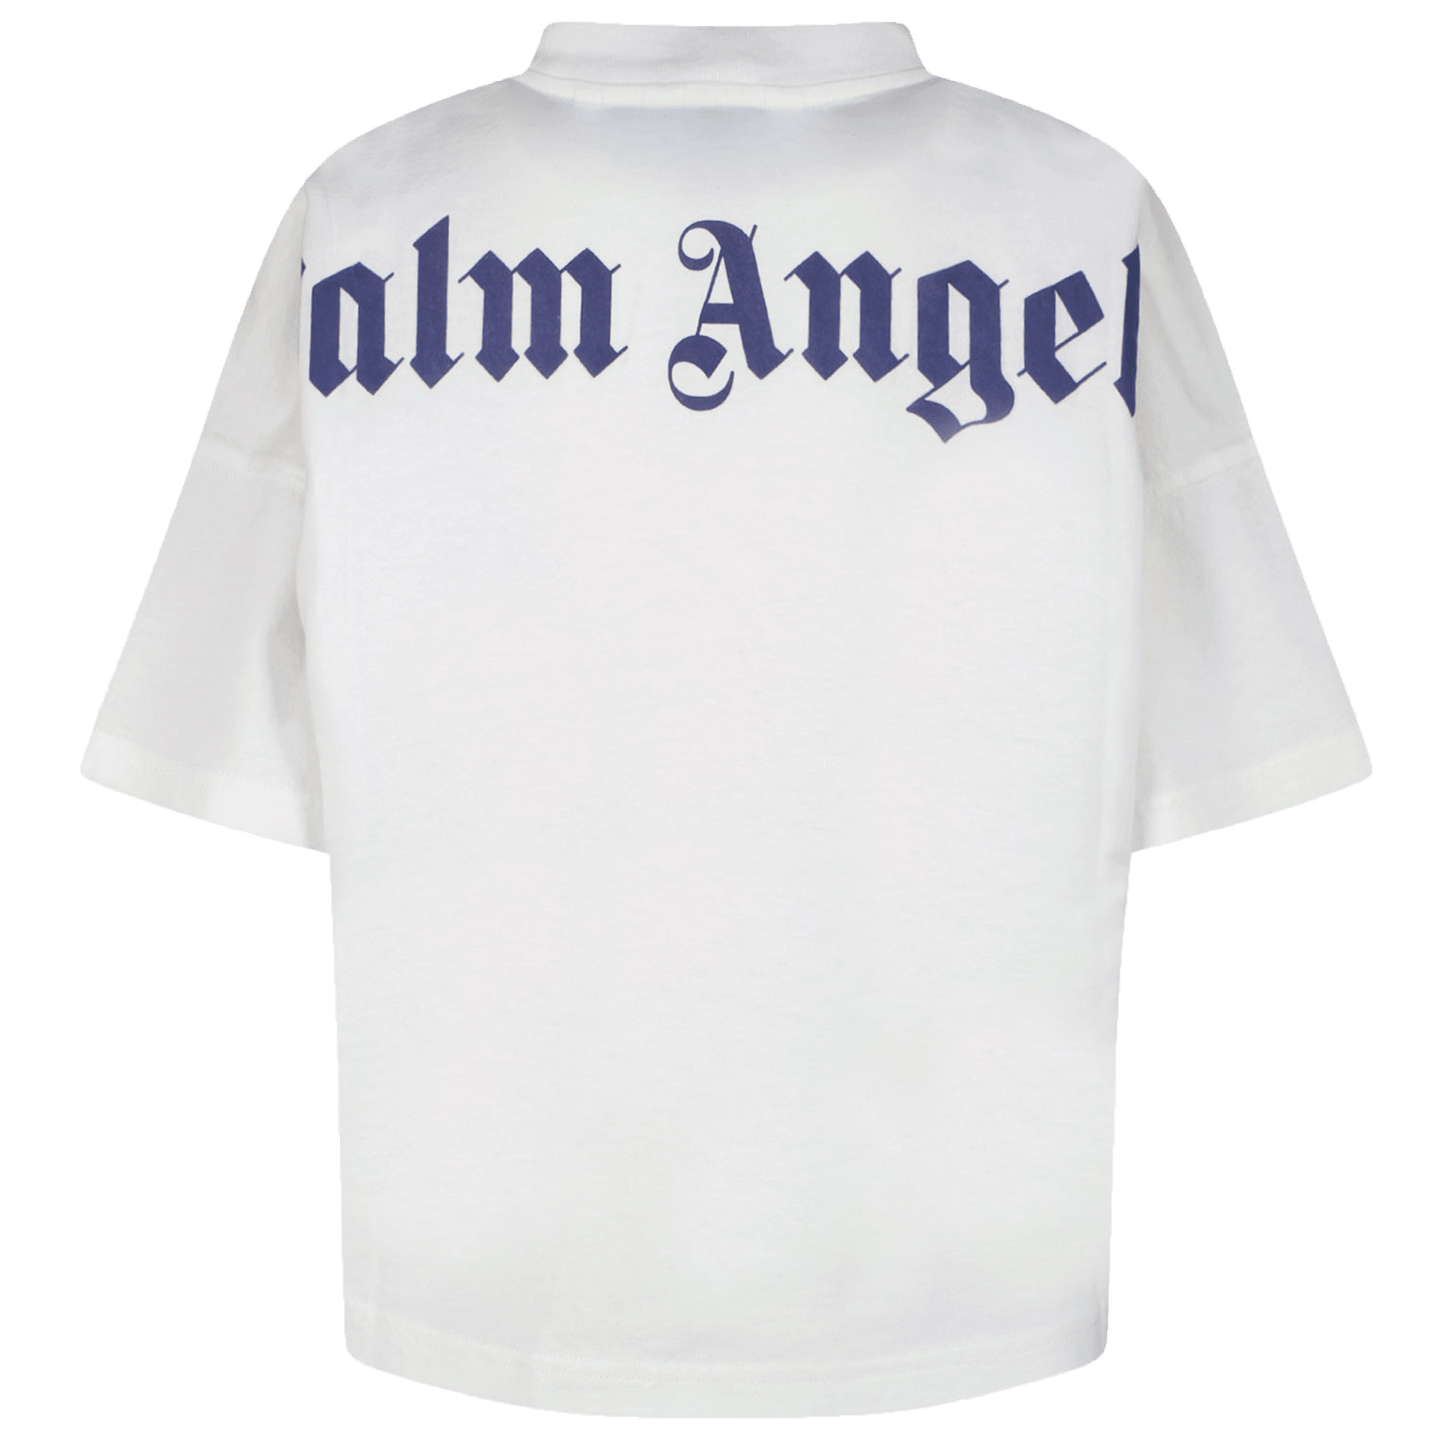 Palm Angels Kinder Unisex T-Shirt Wit 4Y